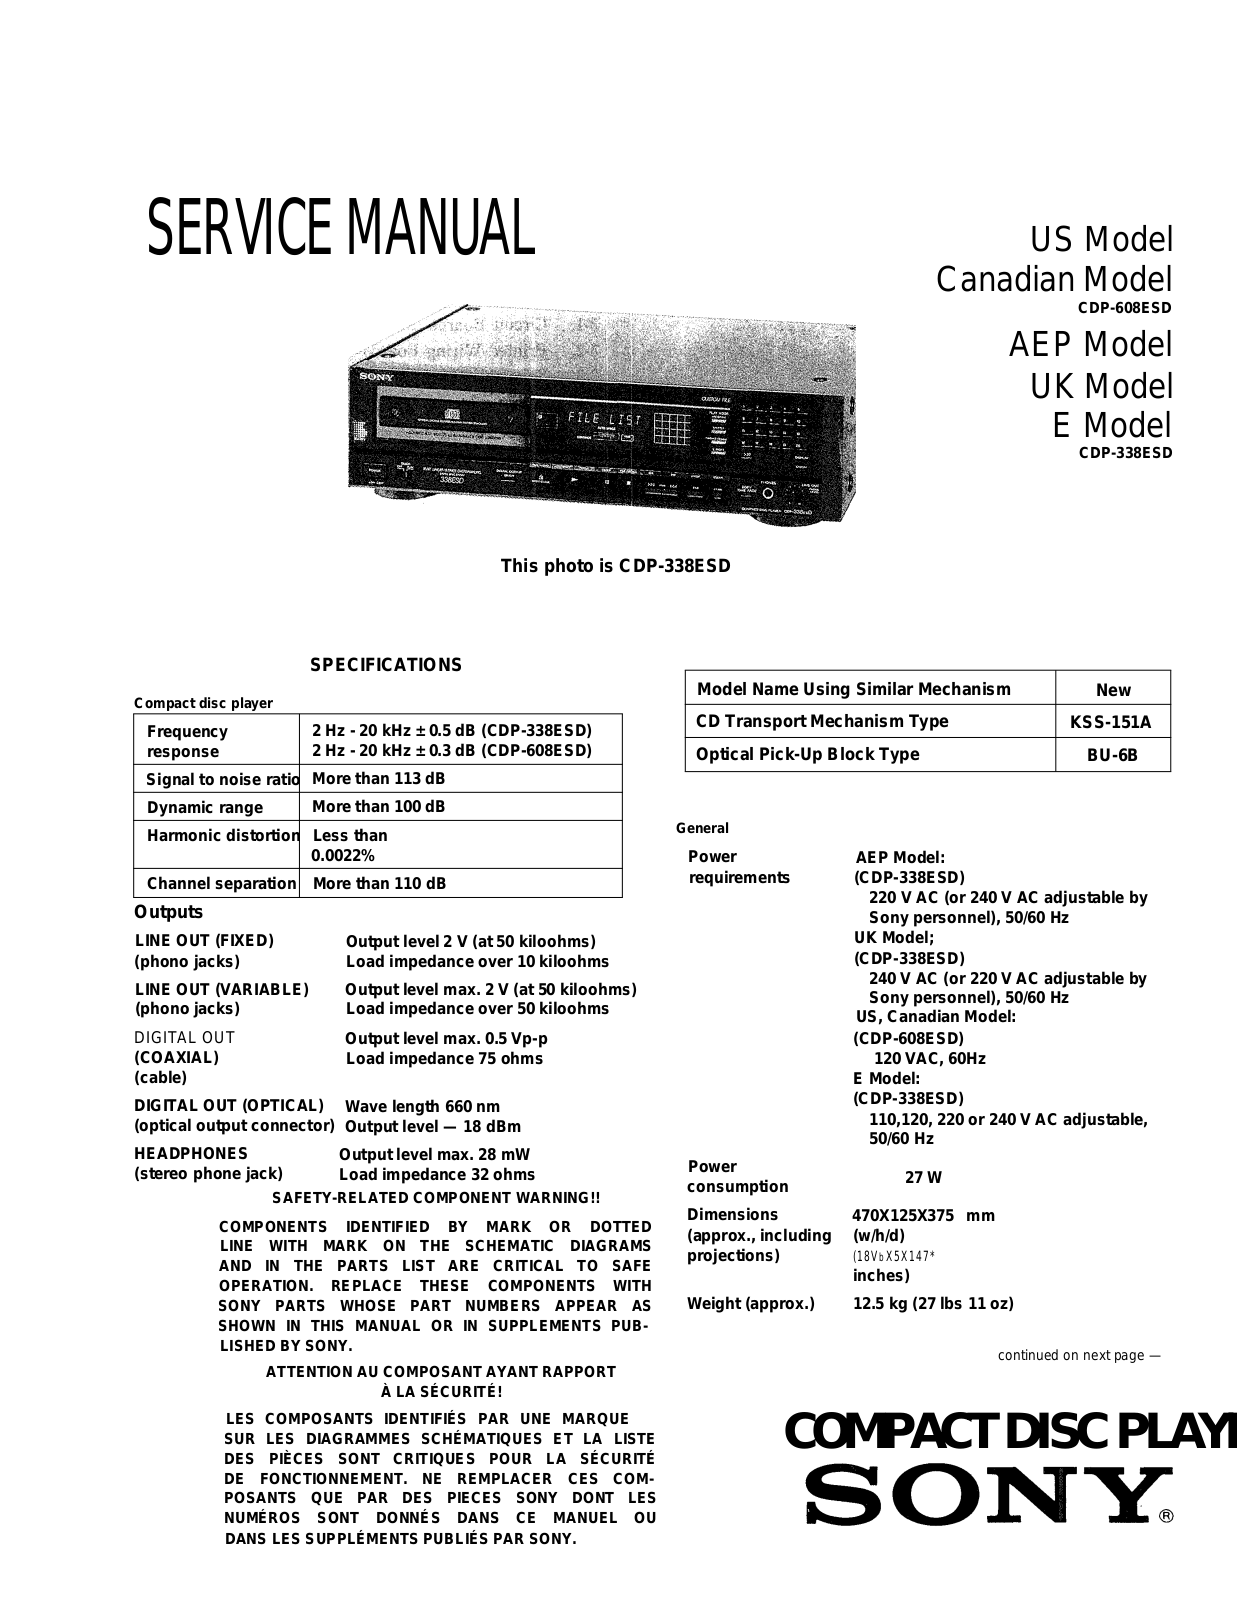 Sony cdp 338esd User Manual